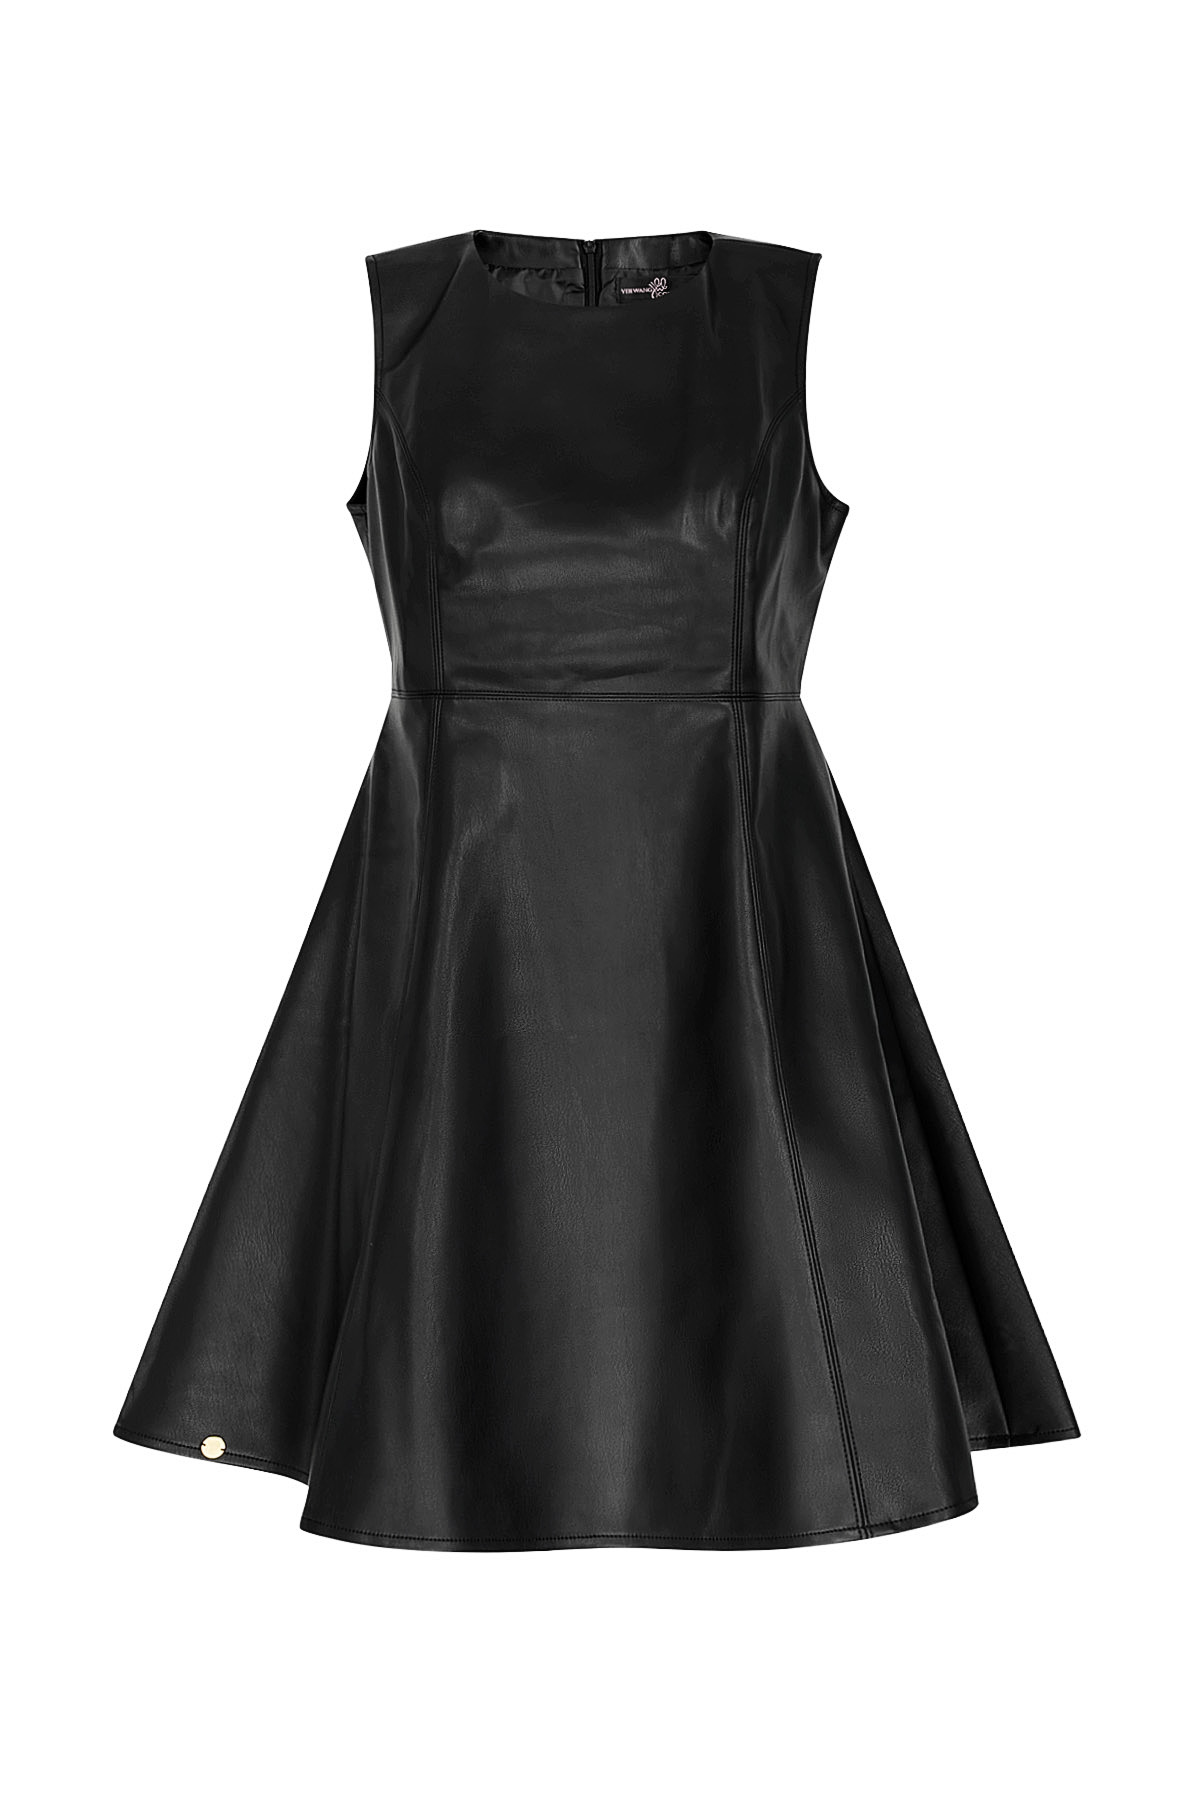 PU leather dress flared - black h5 